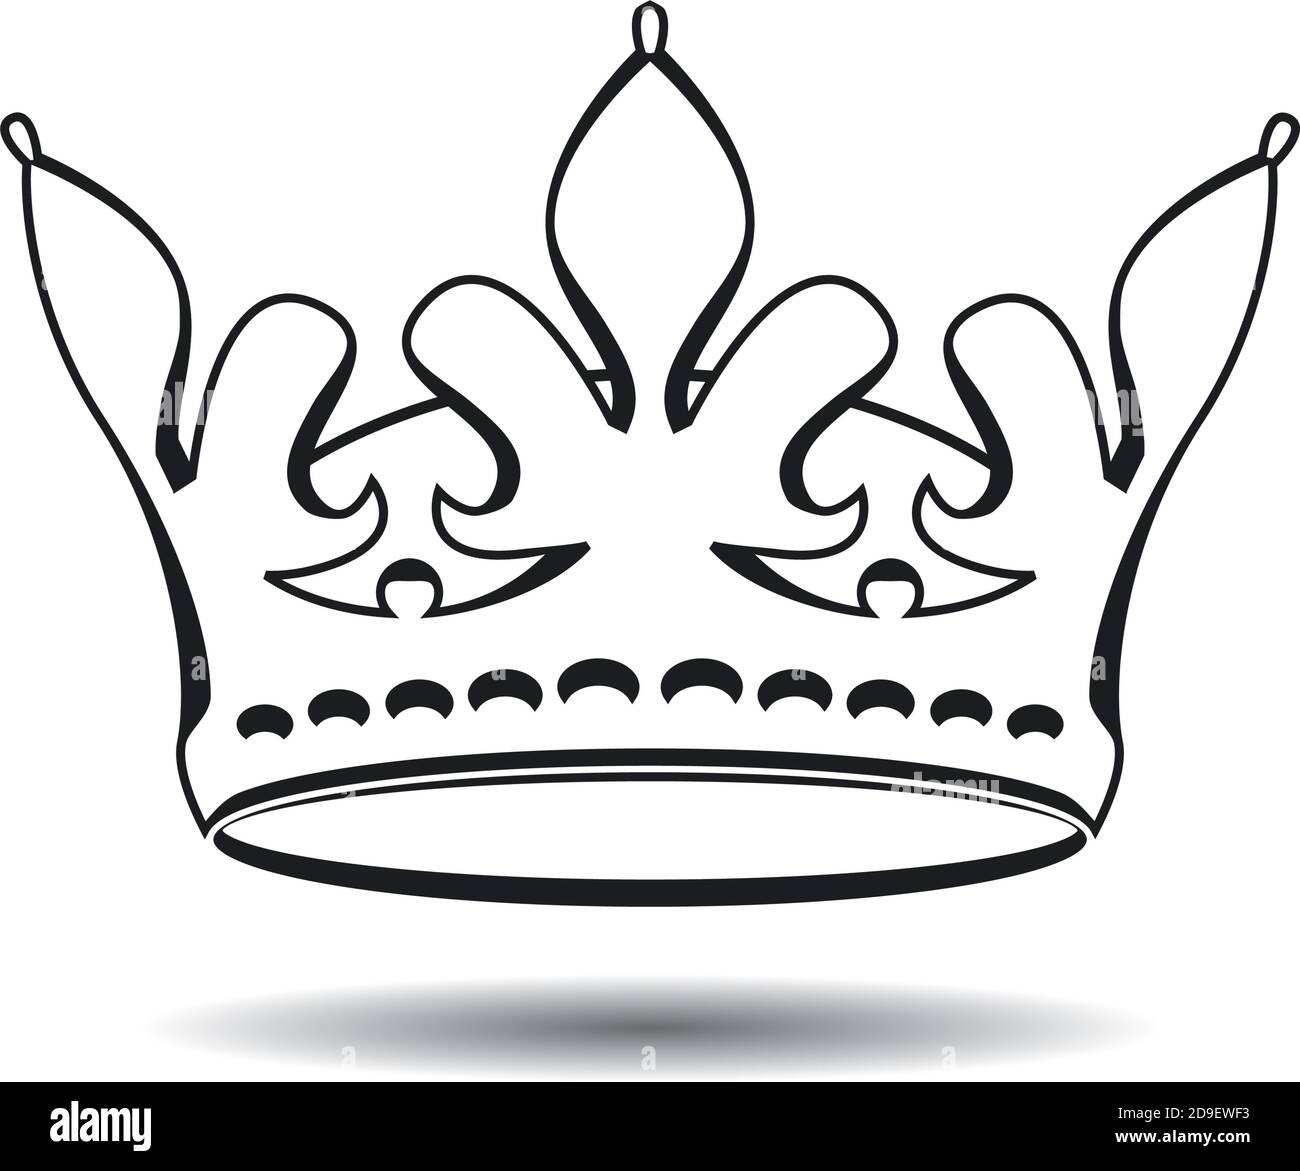 Corona rey fotografías e imágenes de alta resolución - Alamy